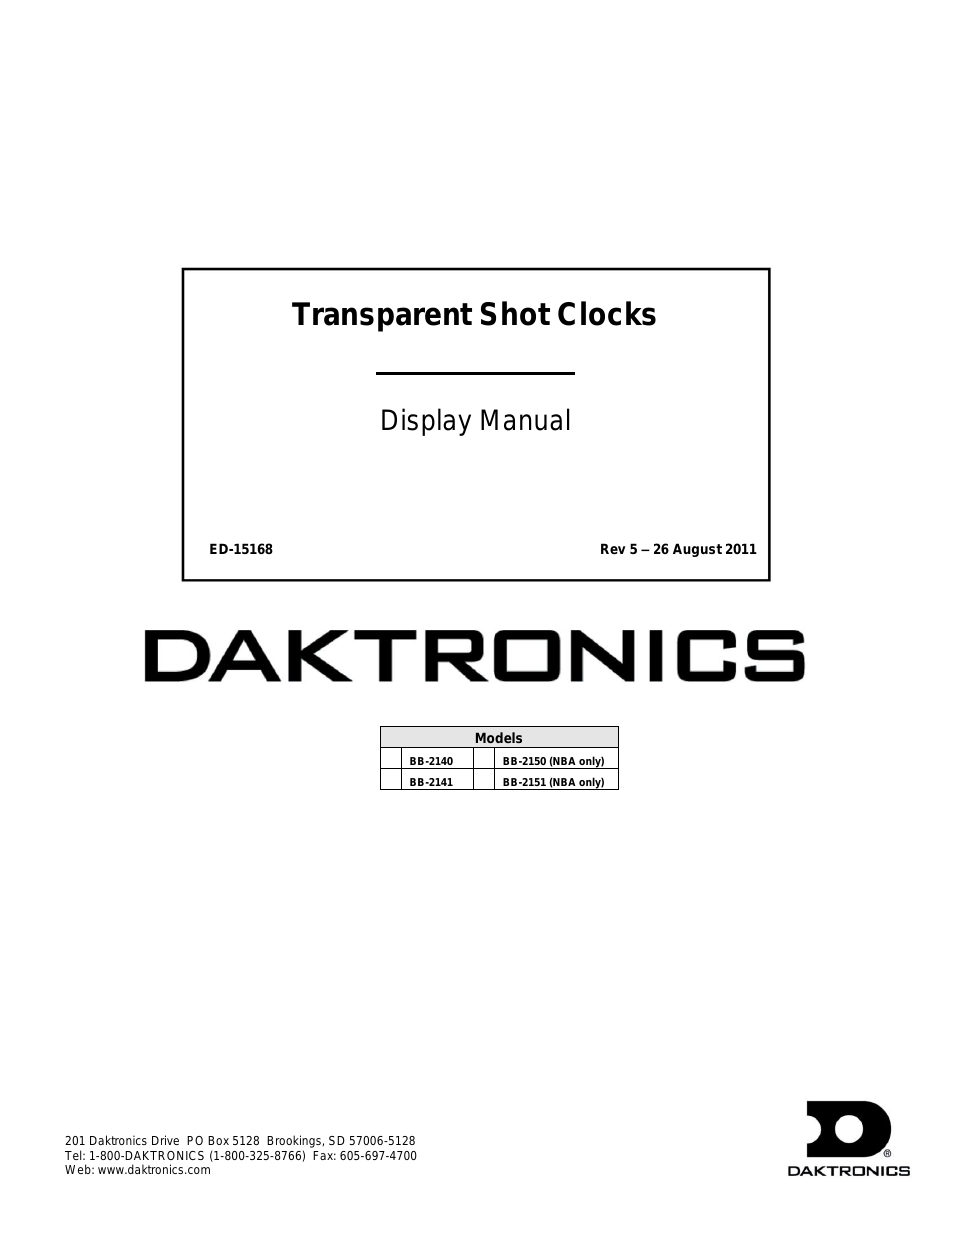 BB-2141 Transparent Shot Clock